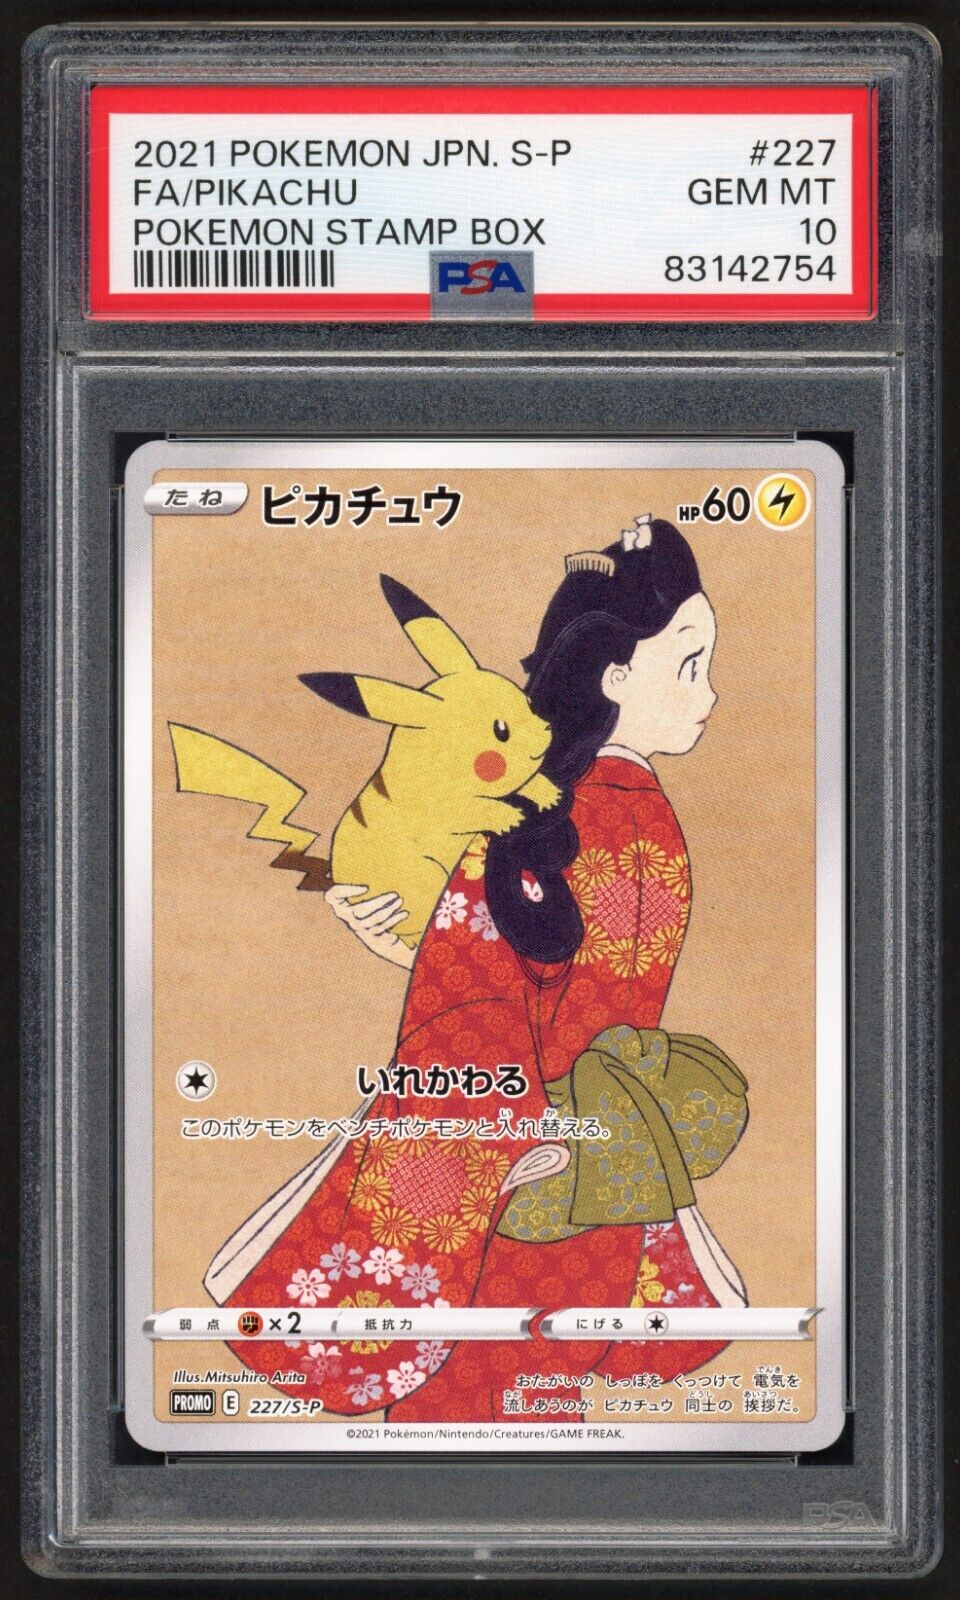 Pikachu FA 227SP Full Art Pokemon Stamp Box Promo Japanese GEM MINT PSA 10